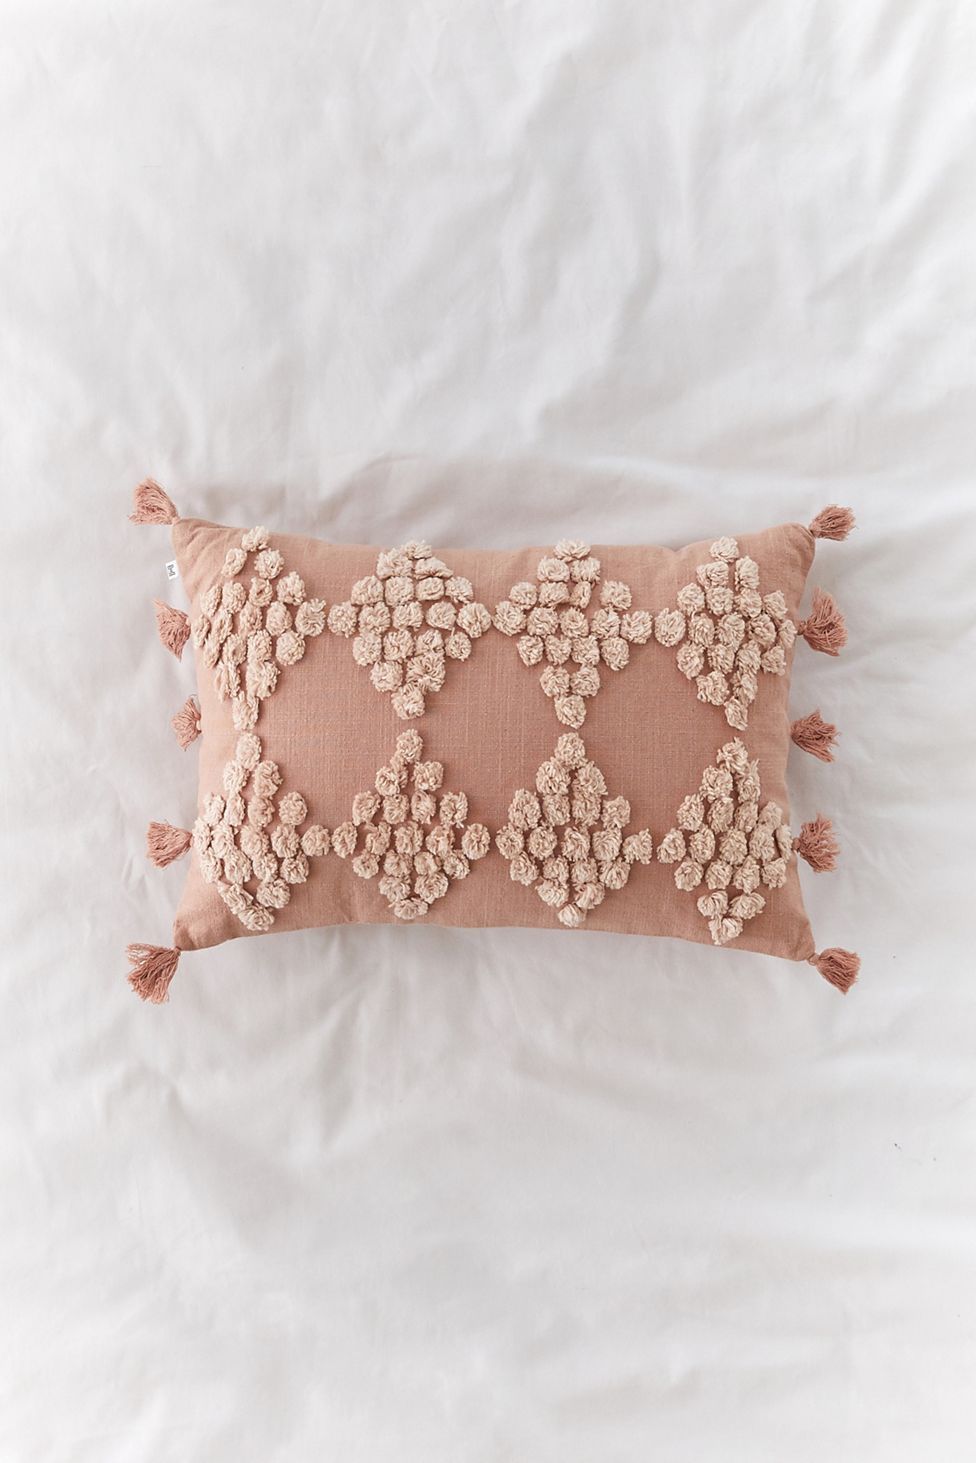 Reema Back Cushion - Reema Back Cushion -   18 diy Pillows boho ideas